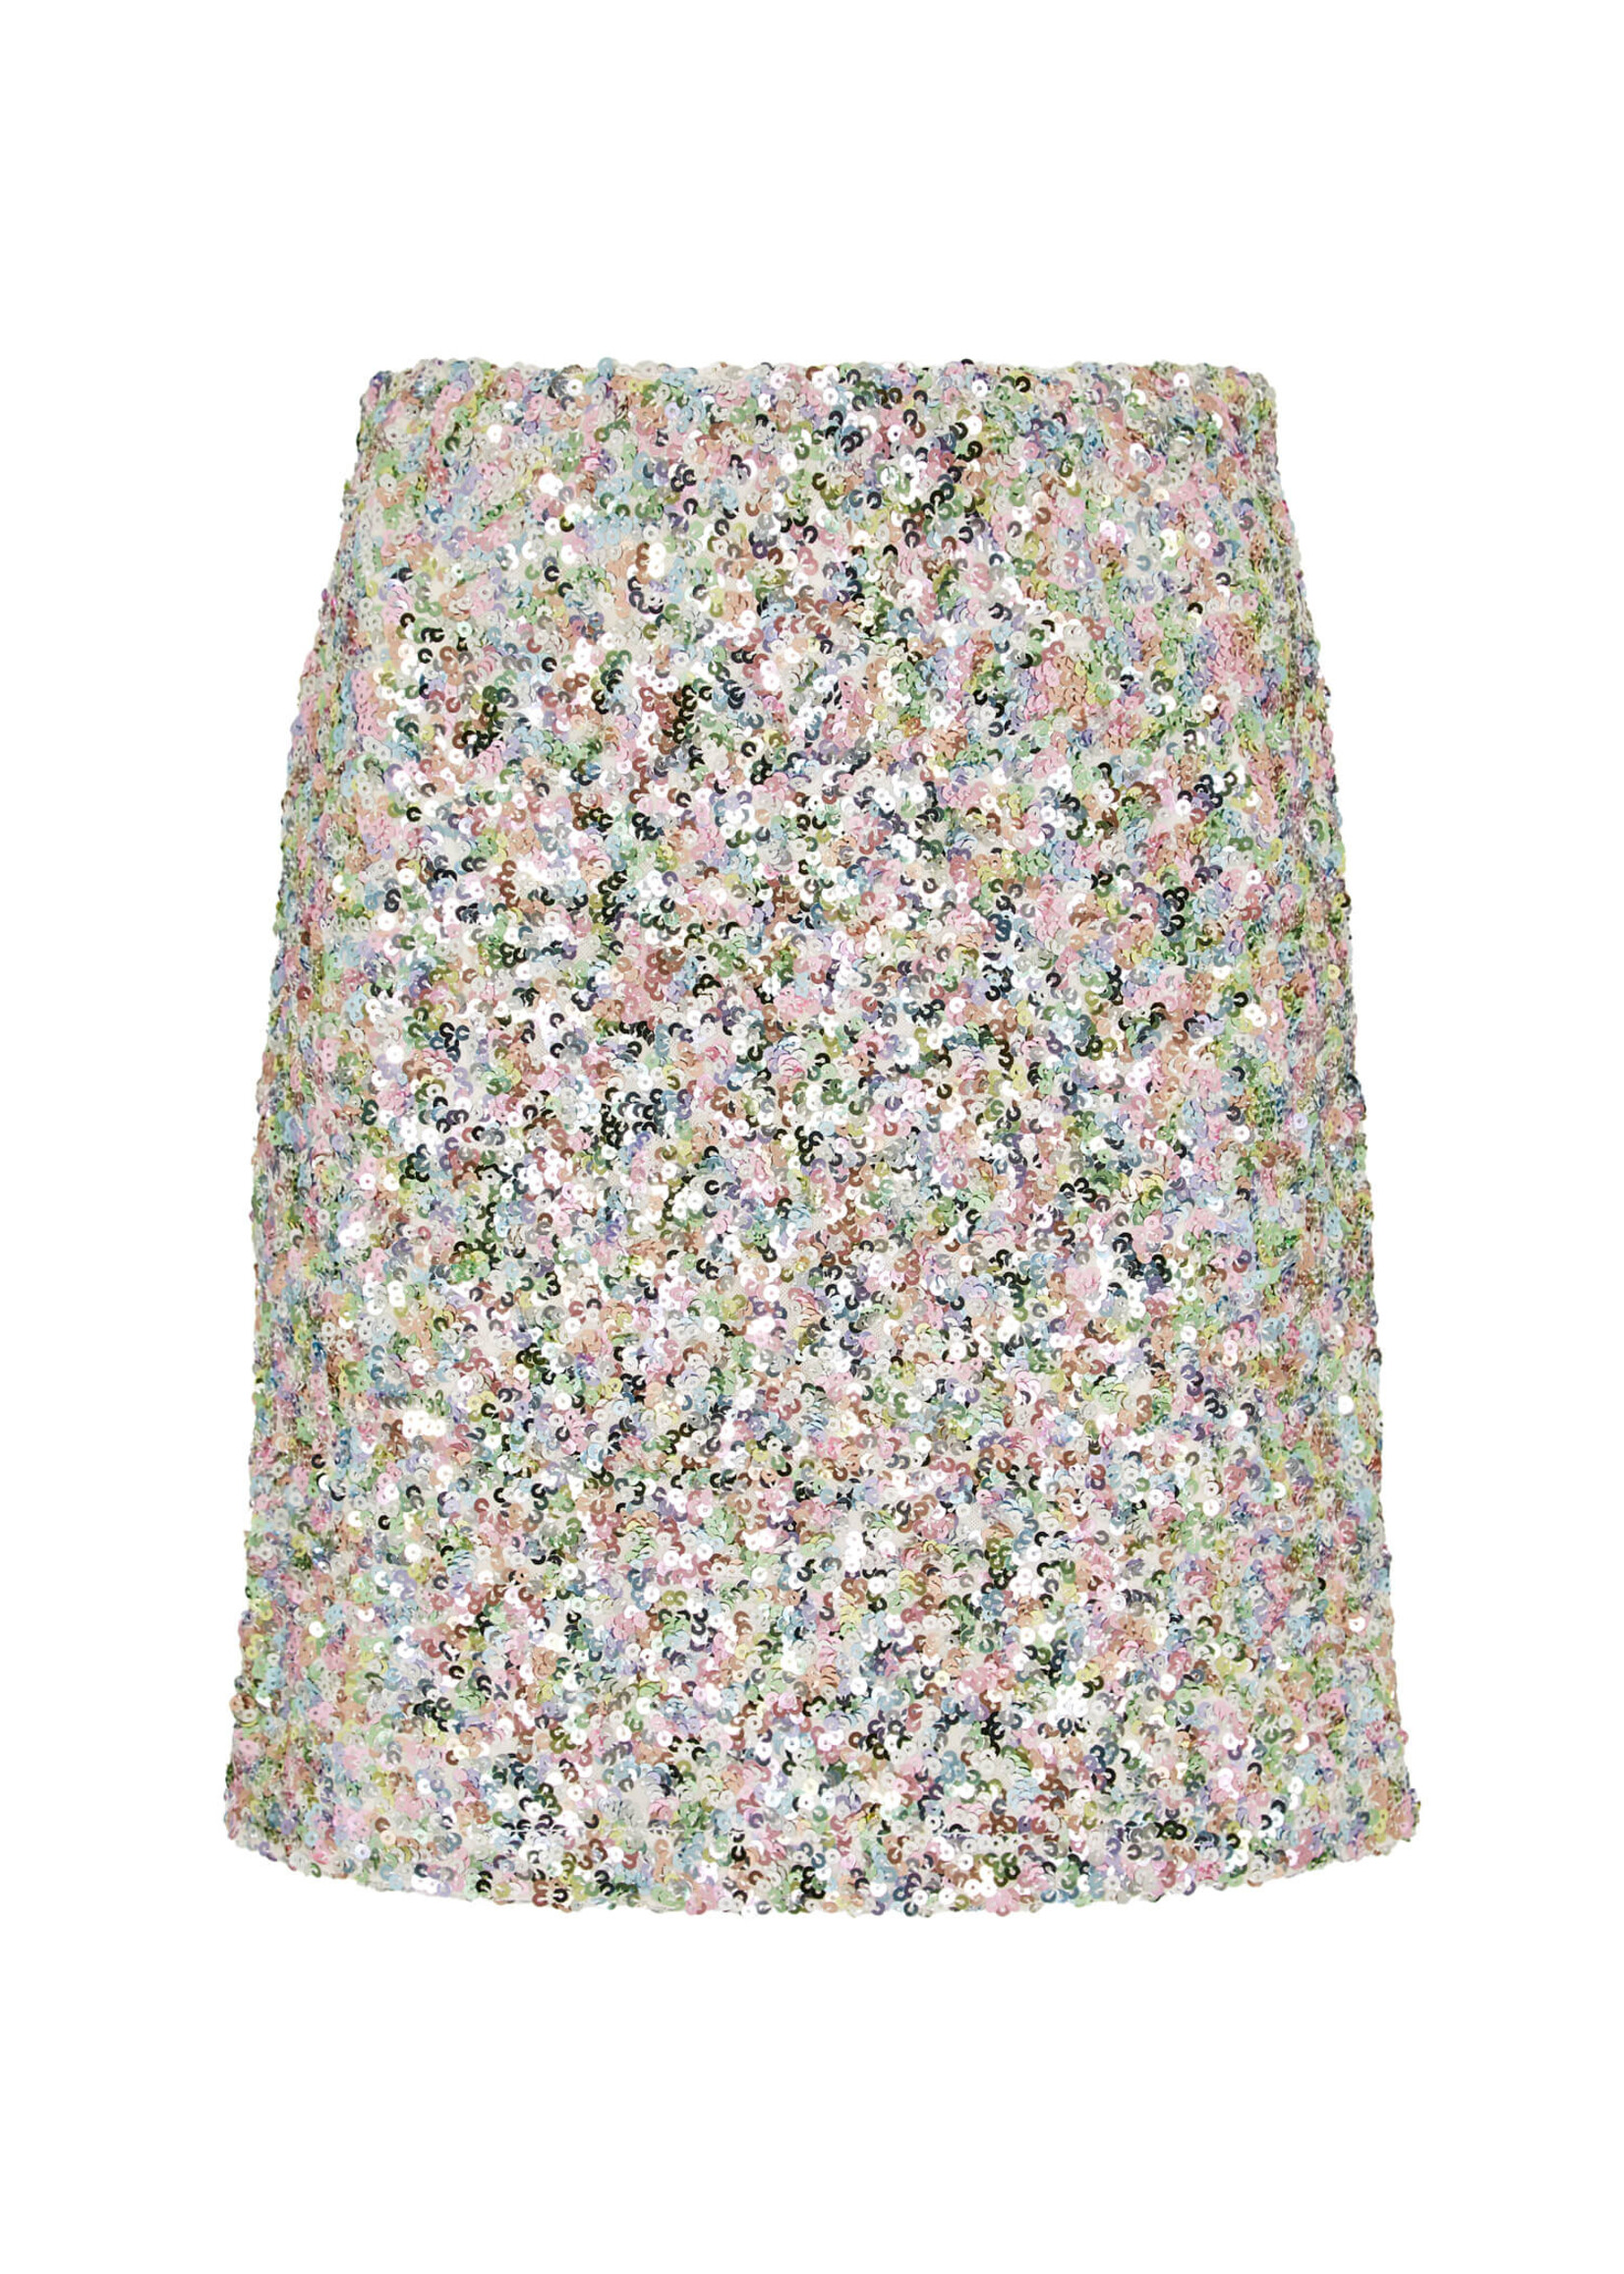 Sequins Mini Skirt Multi